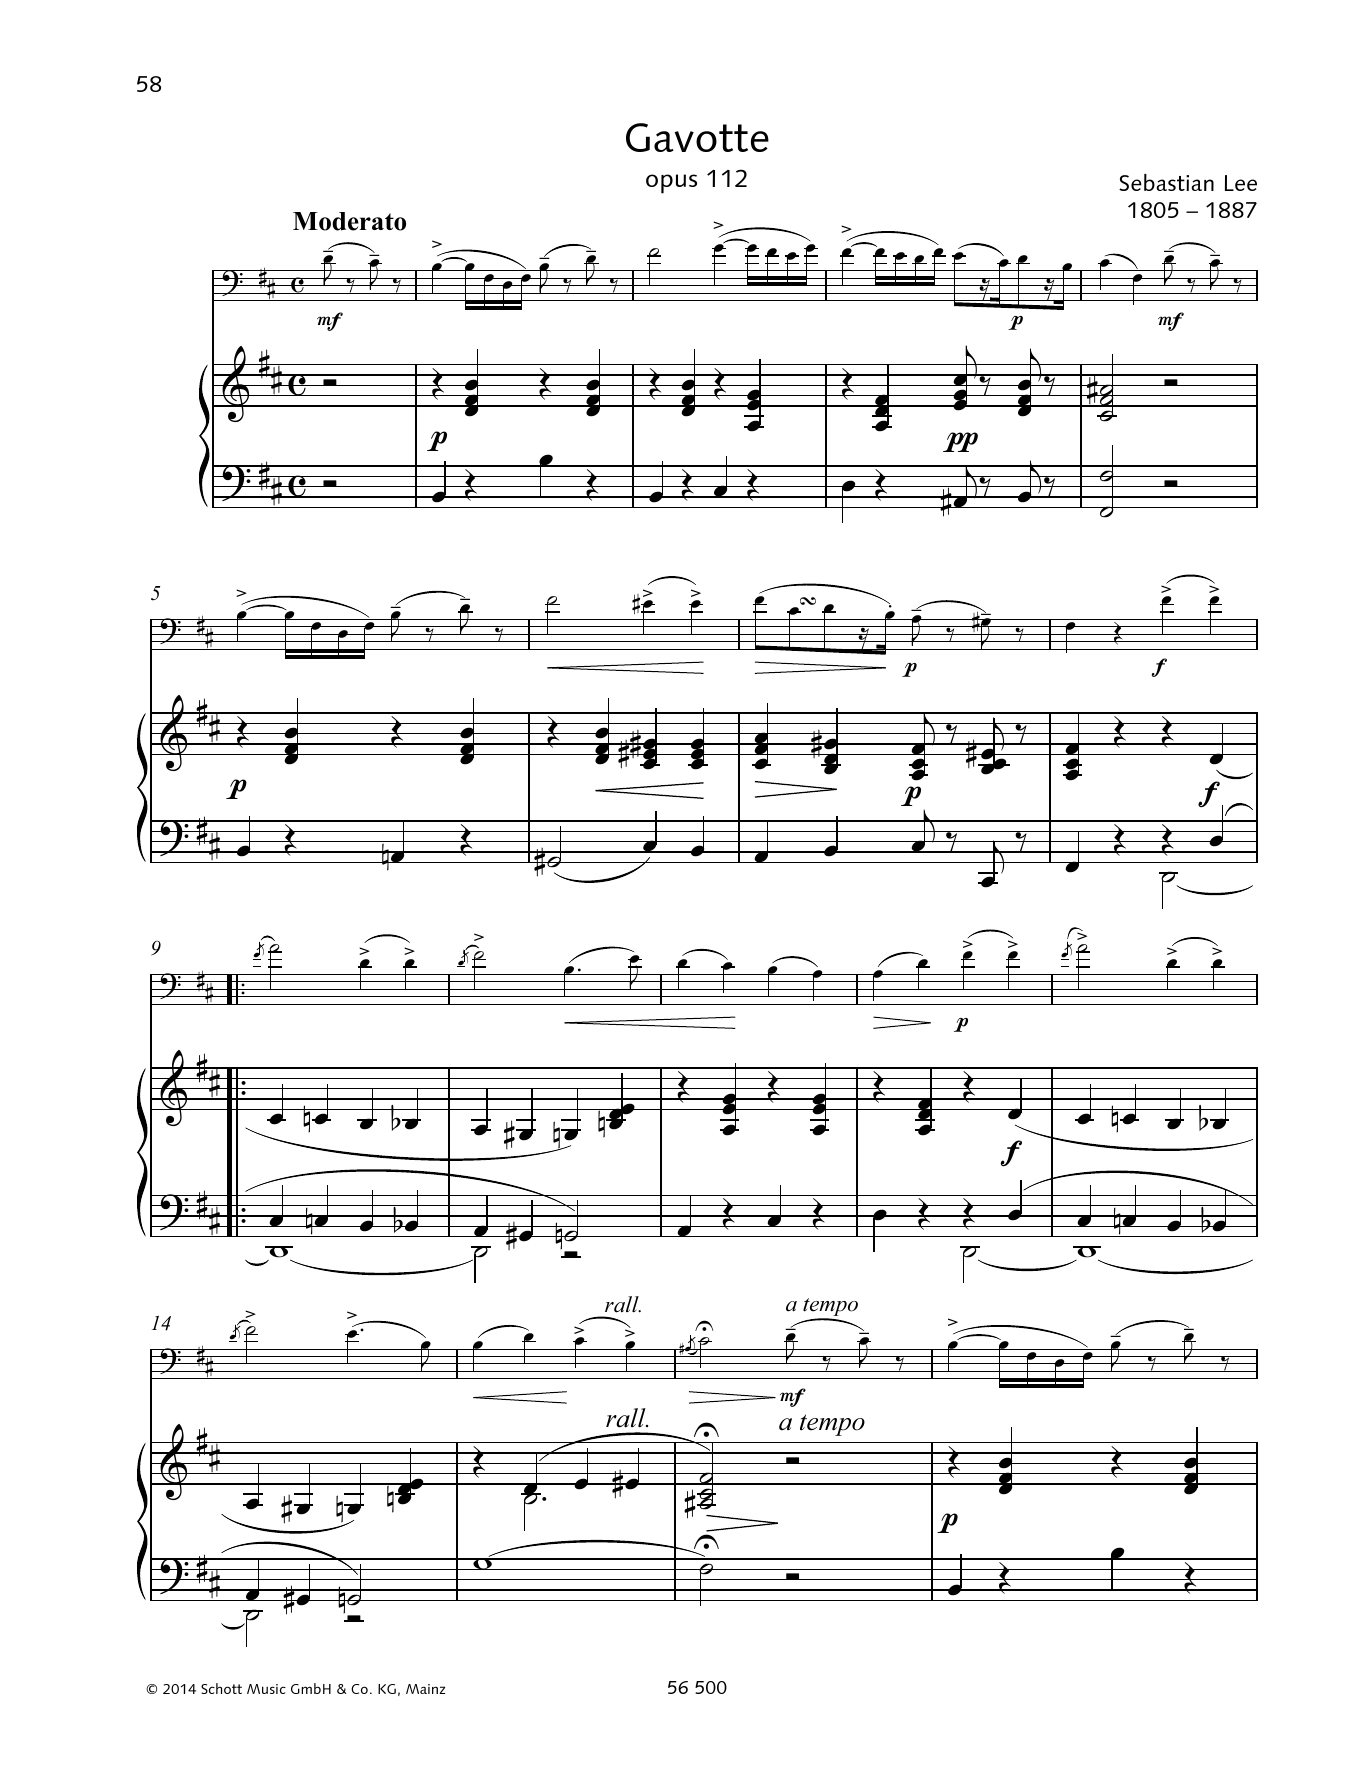 Sebastian Lee Gavotte Sheet Music Notes & Chords for String Solo - Download or Print PDF